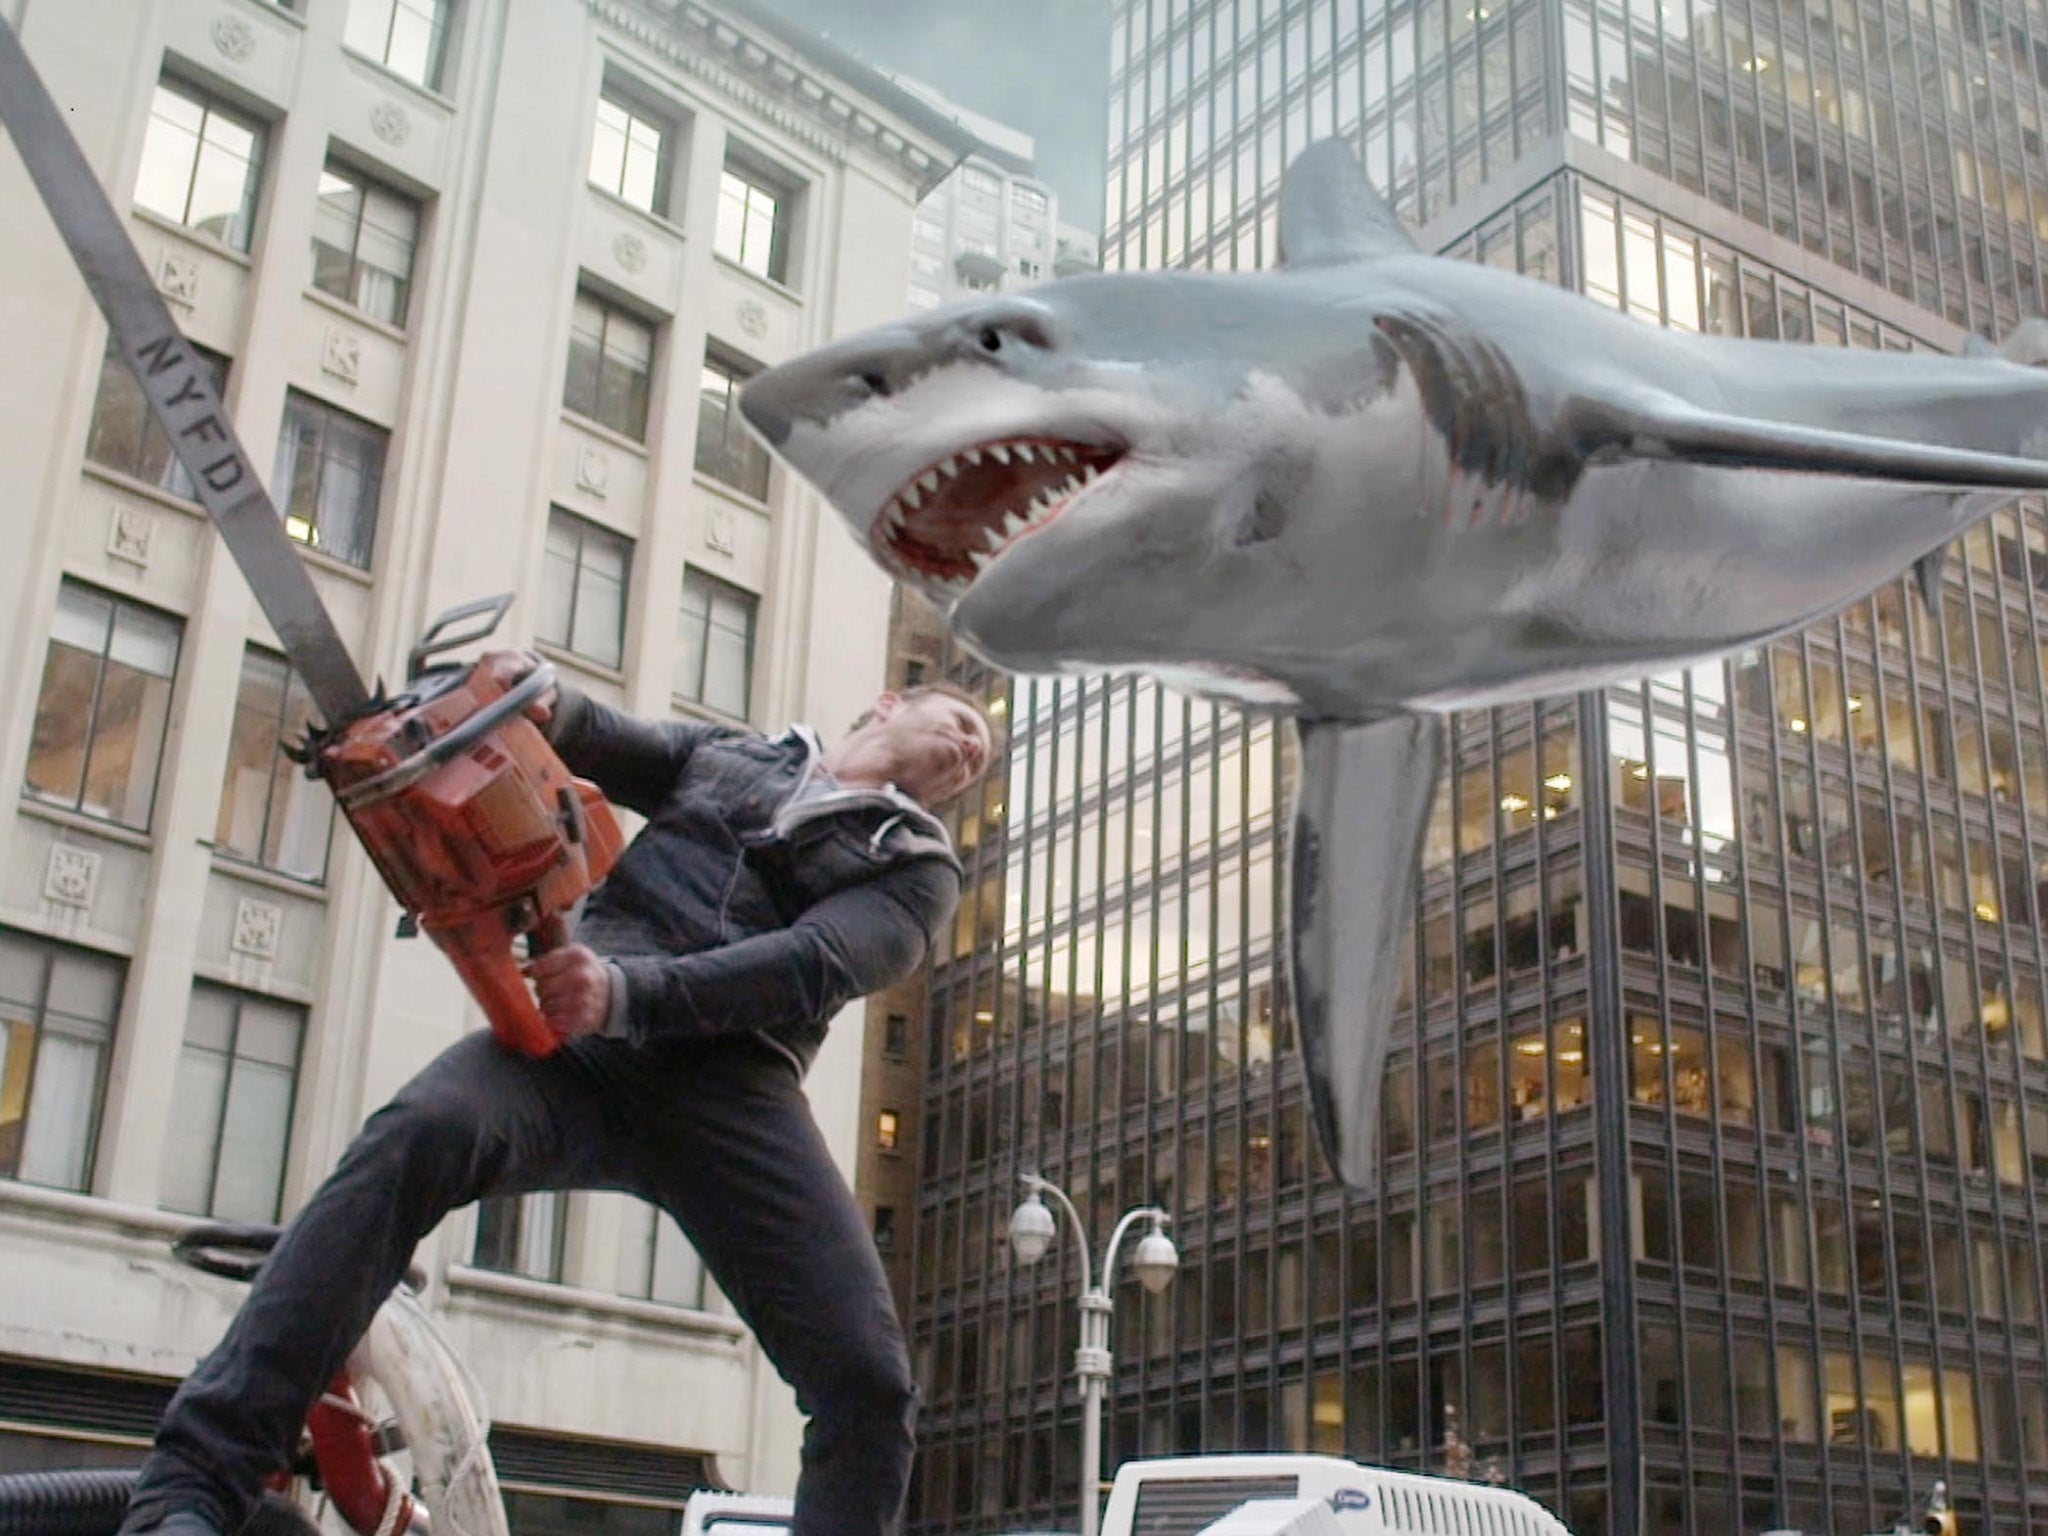 A scene from ‘Sharknado 2’, the film where sharks rain down from the sky